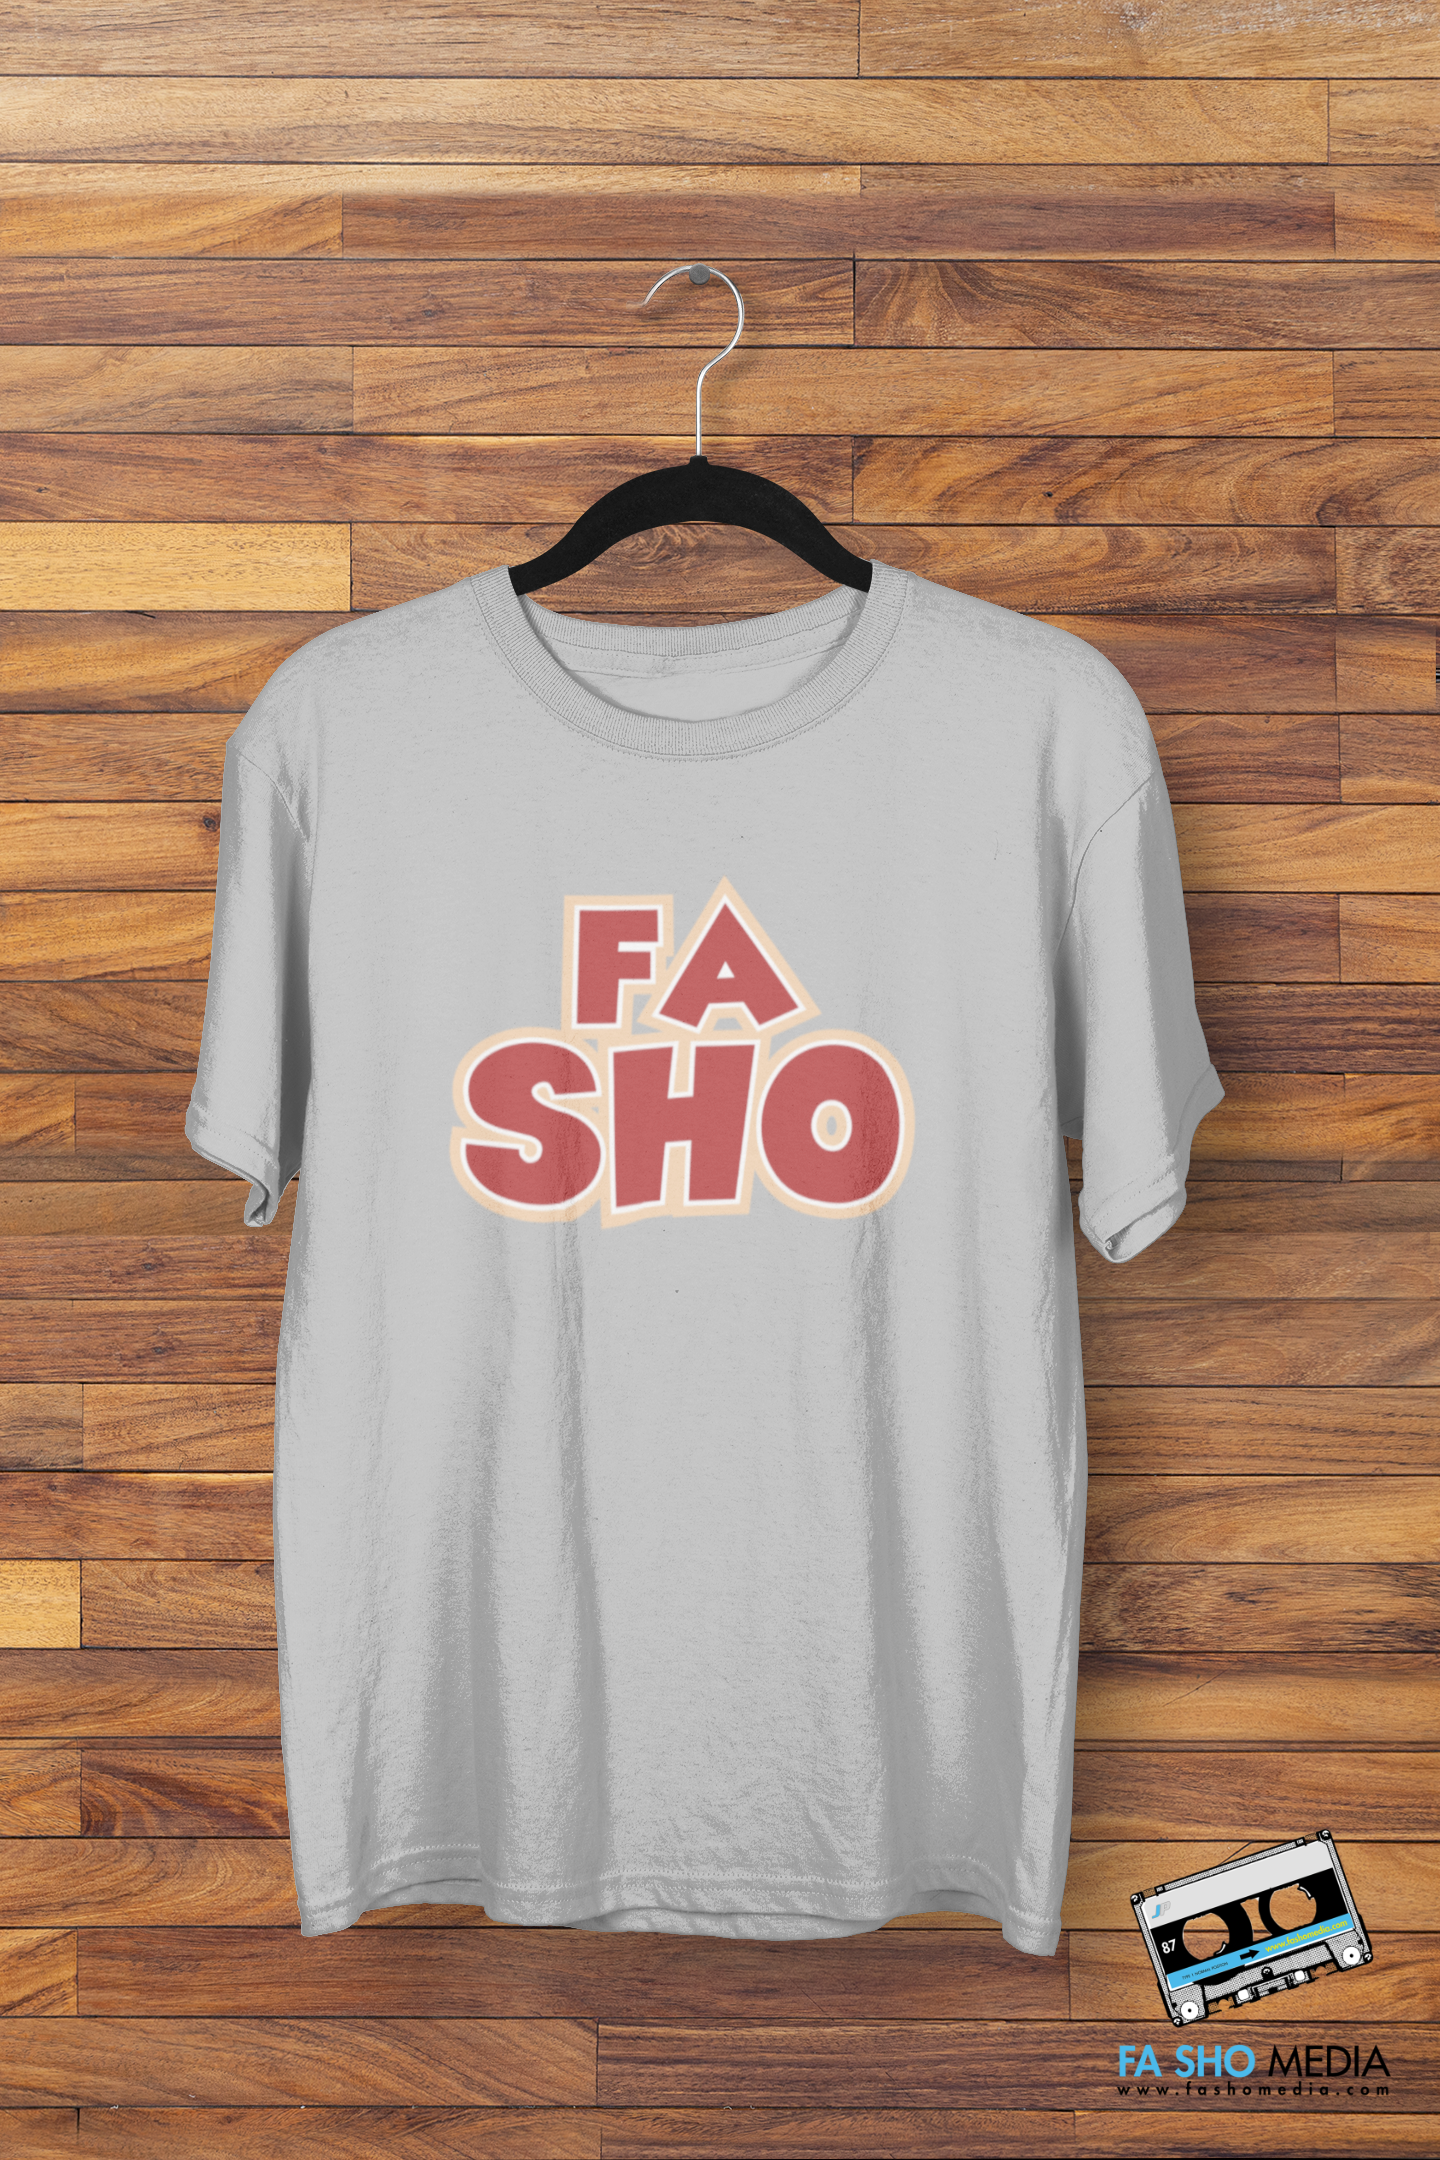 Fa Sho Graffiti Shirt